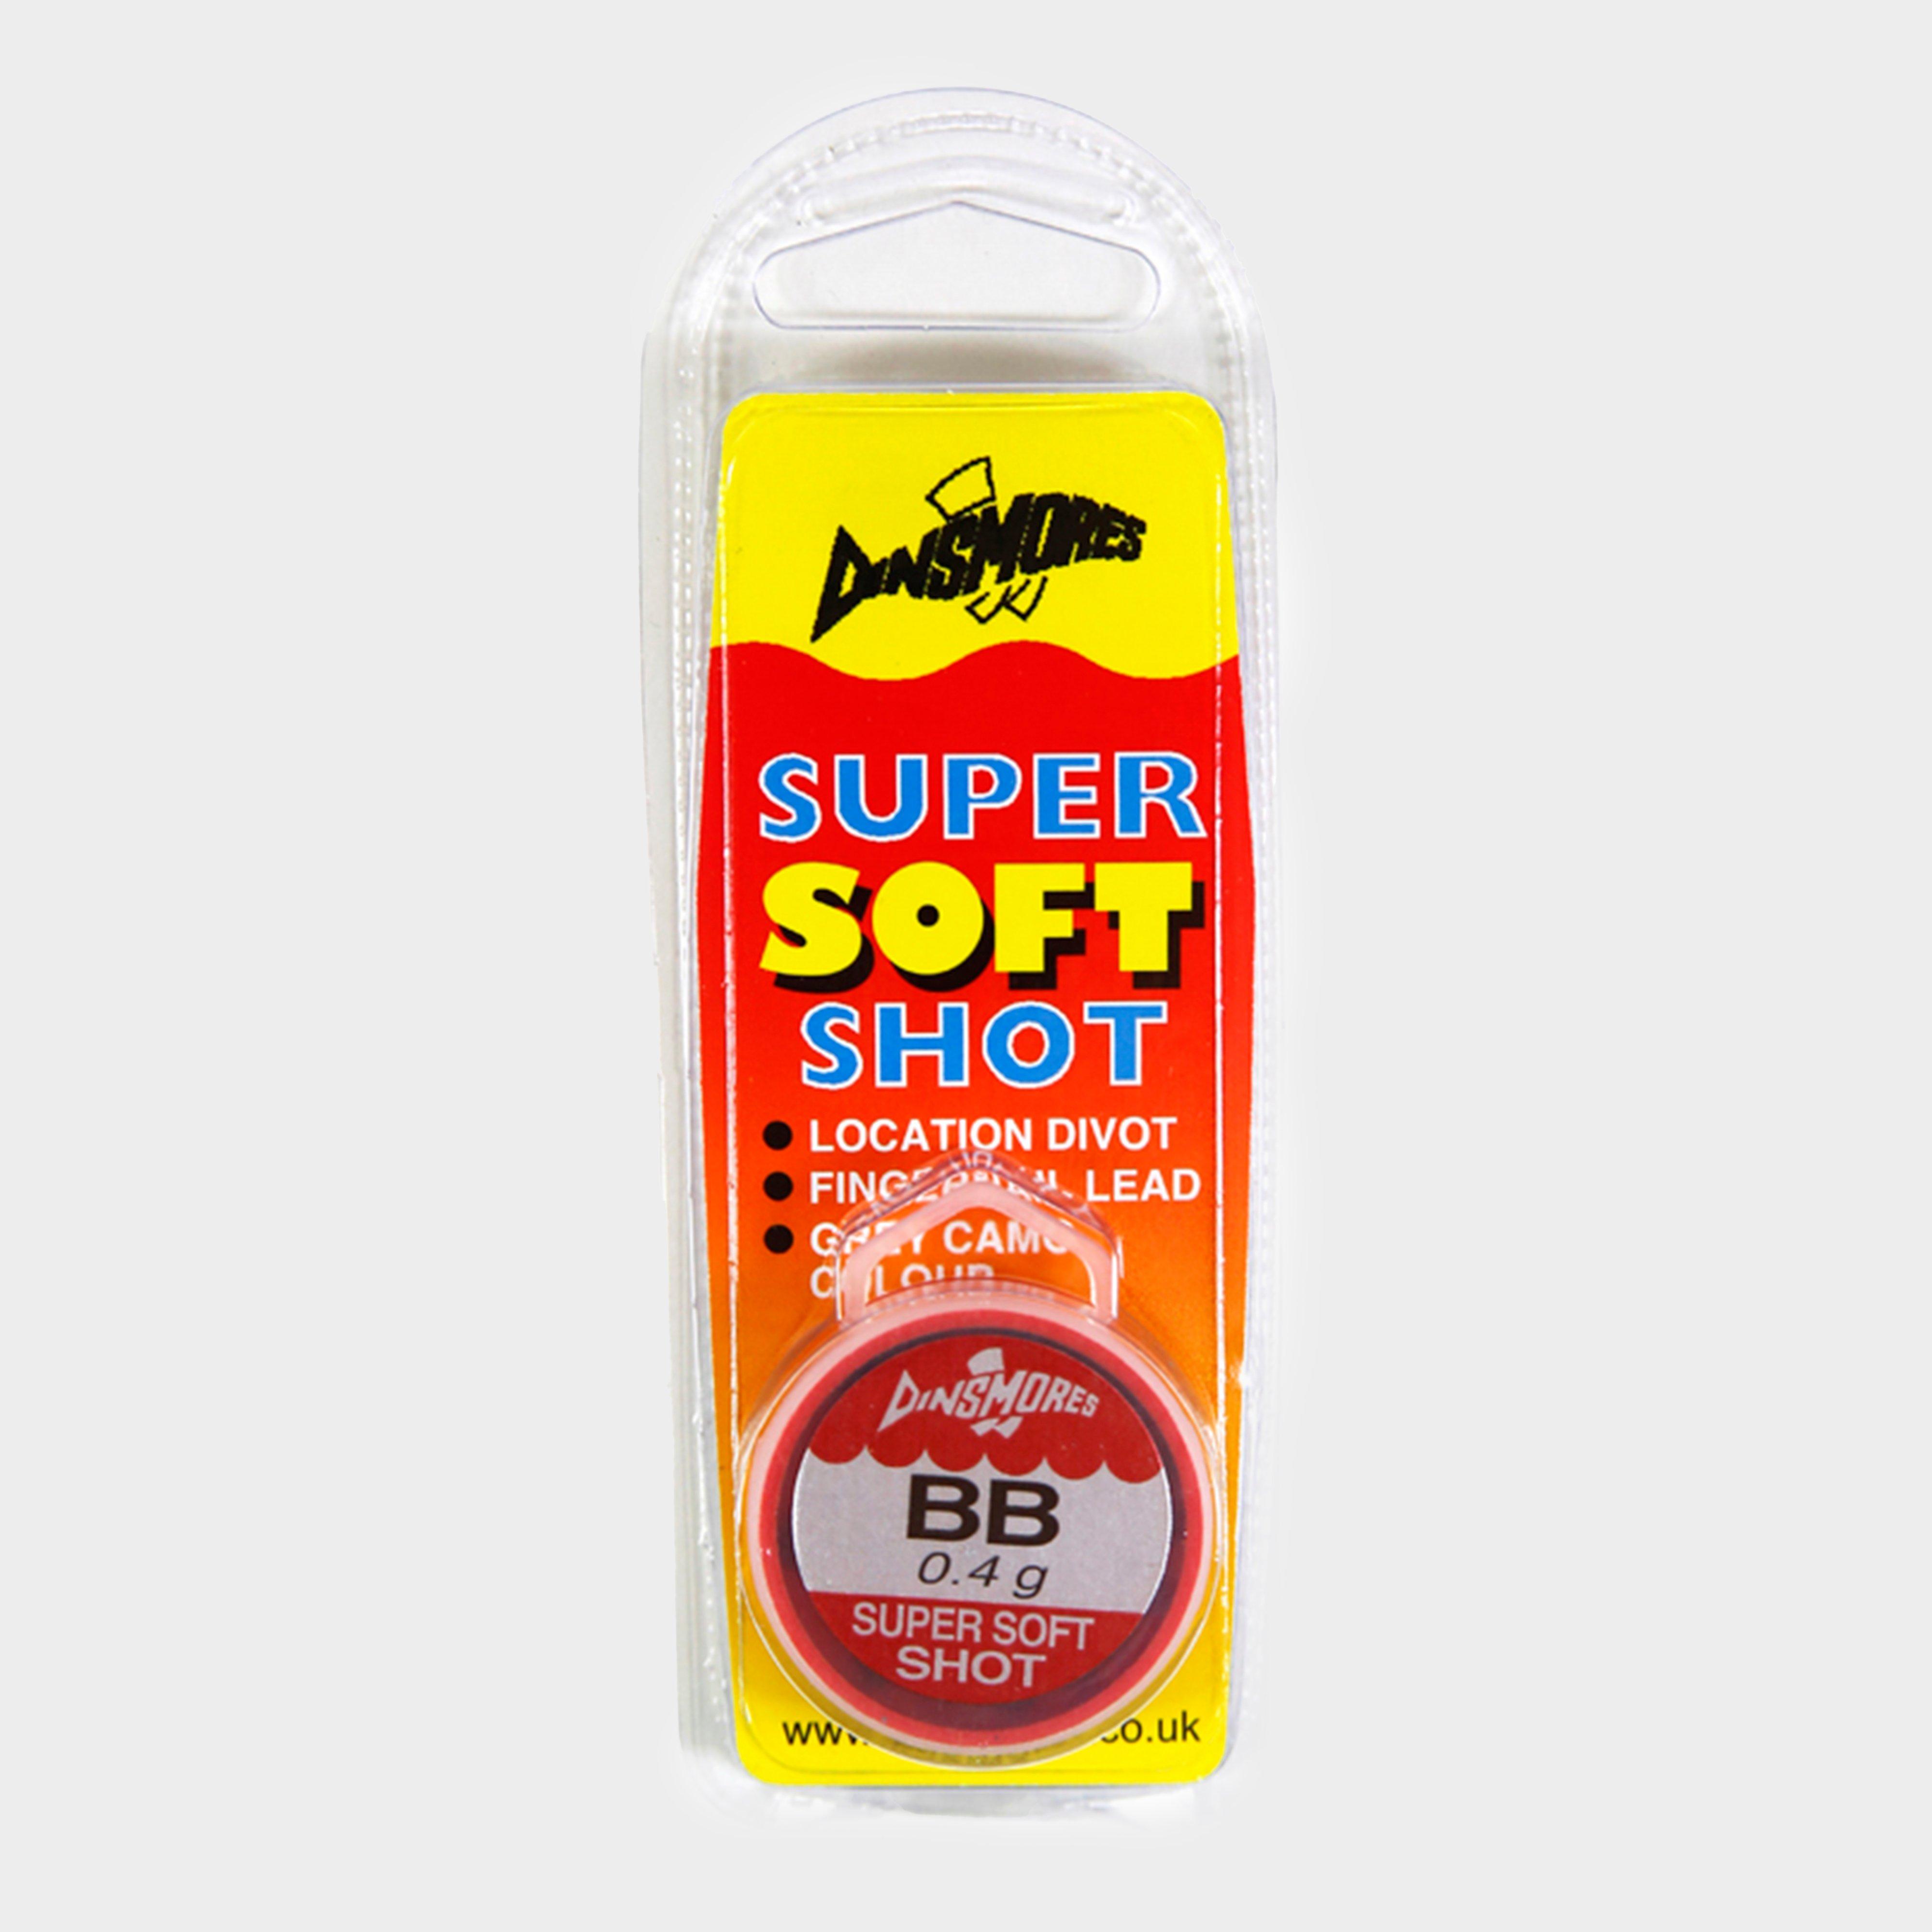 Dinsmores Super Soft Shot Refill (size 6) Review